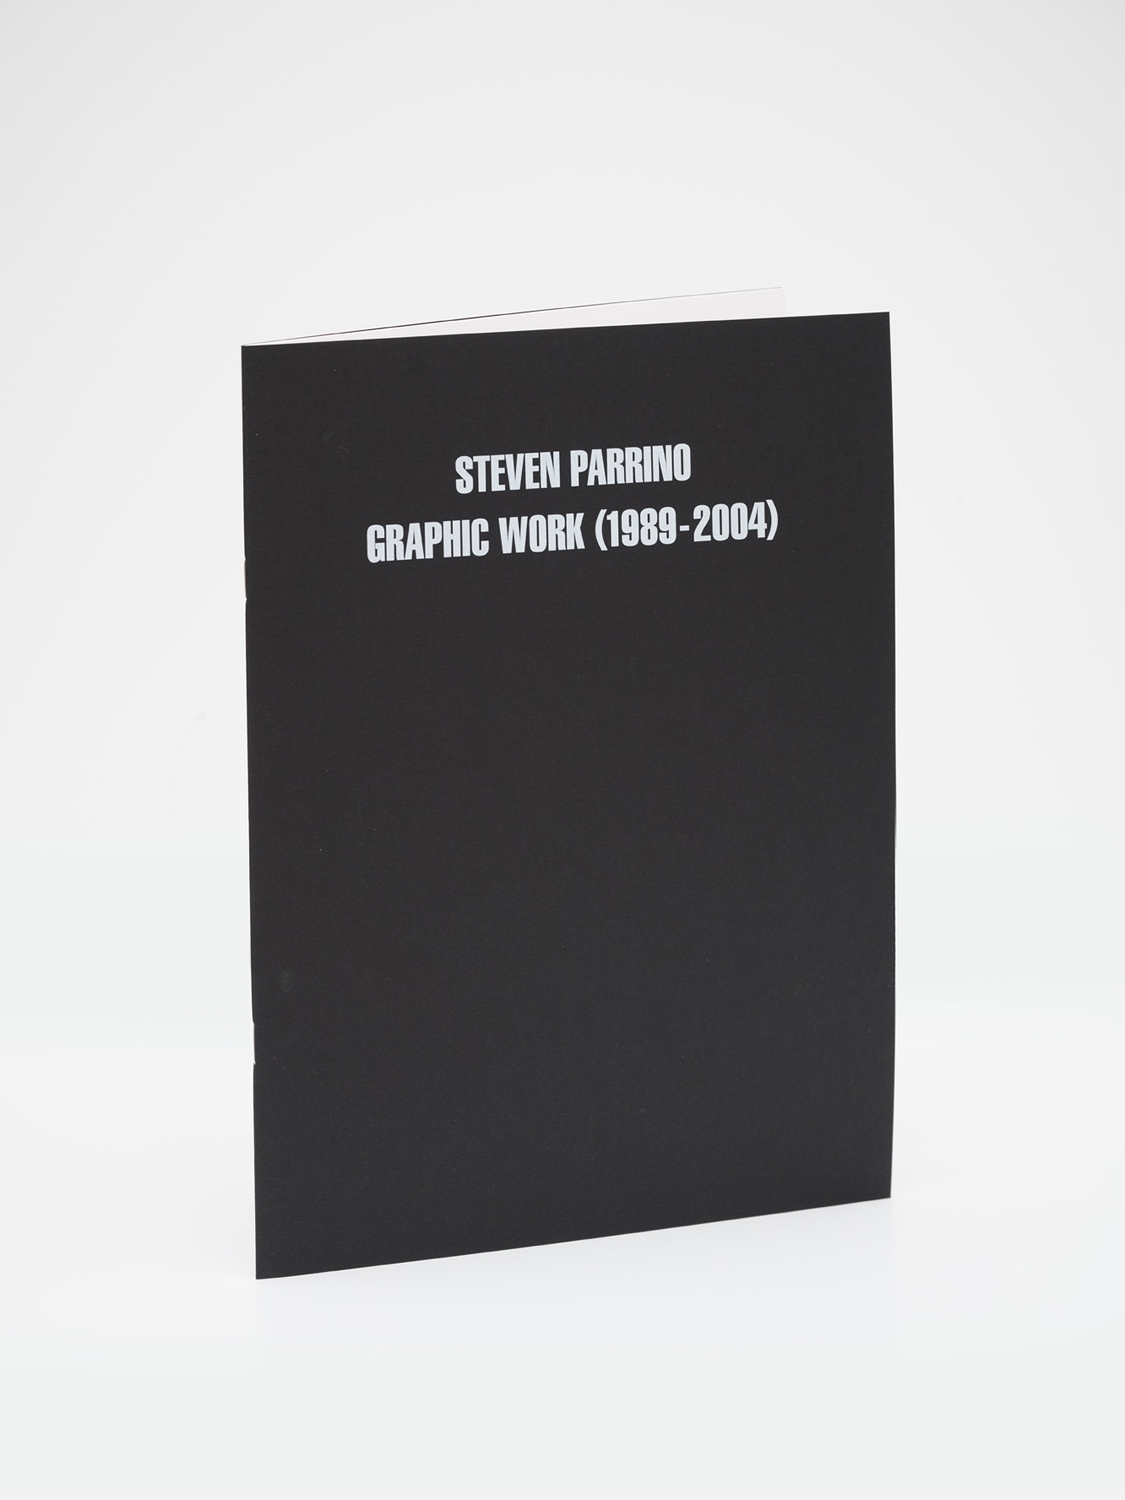 Steven Parrino: Graphic Work (1989-2004)